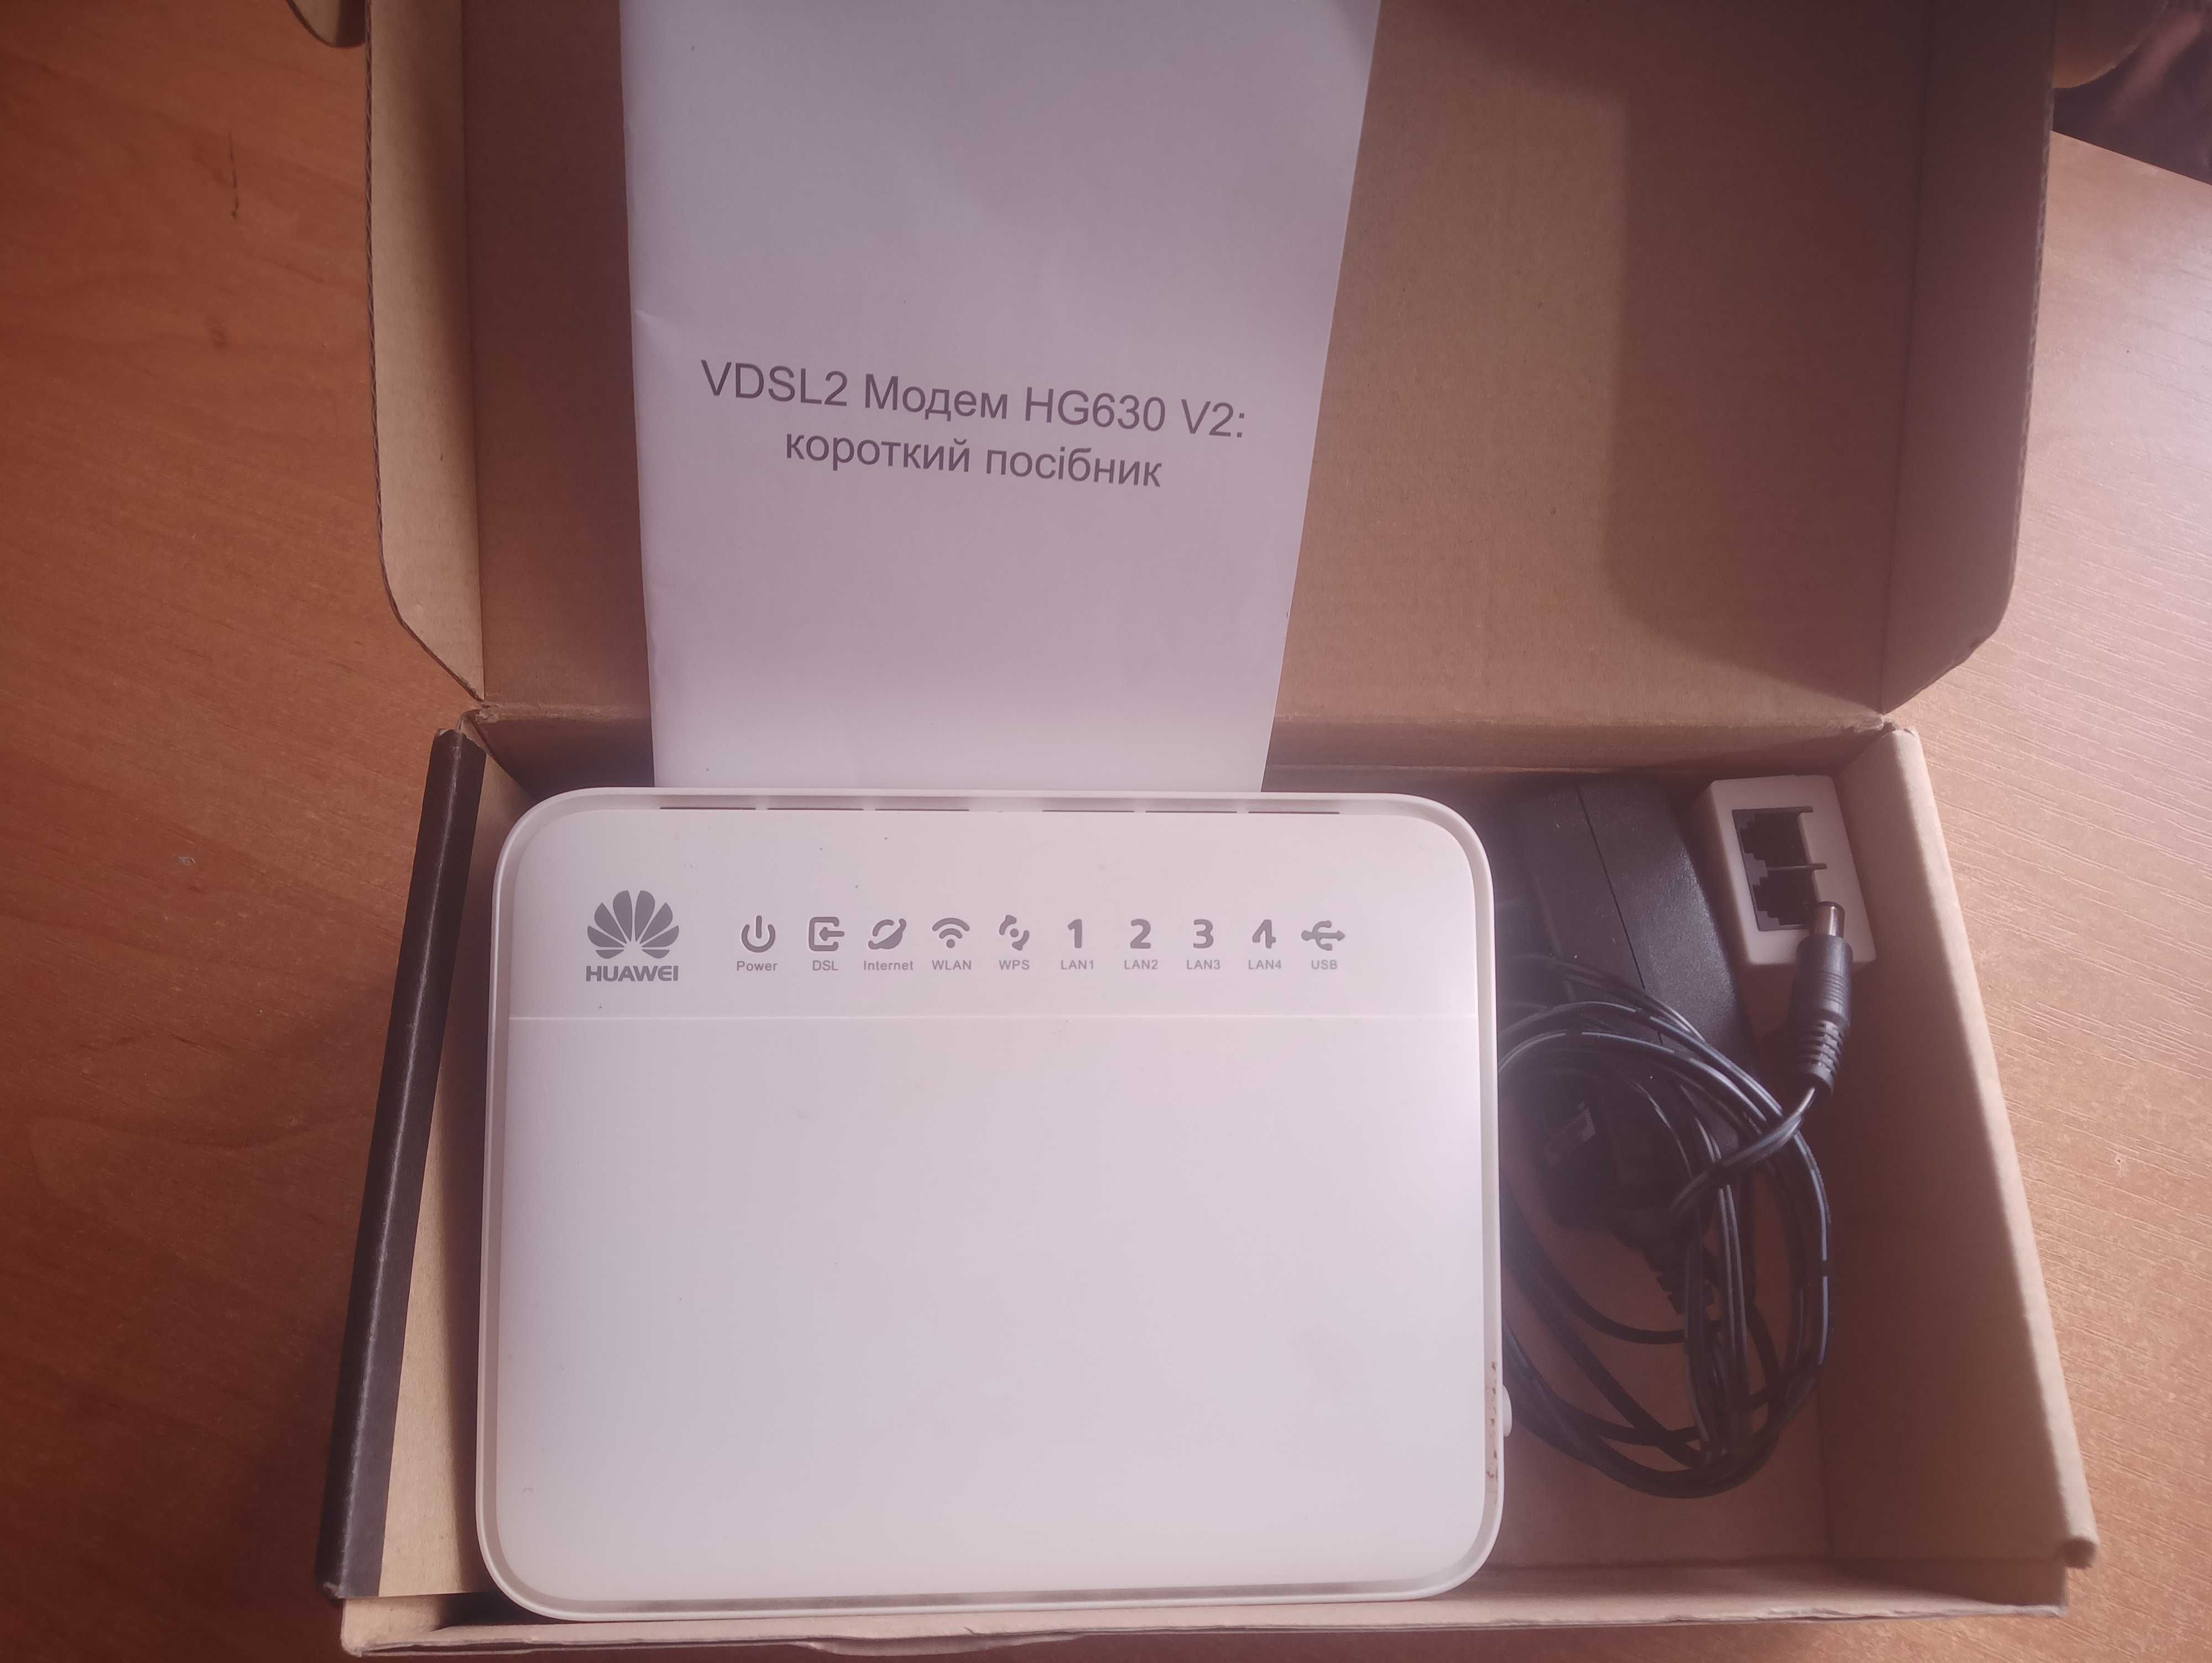 Huawei hg630 v2 VDSL wi-fi router